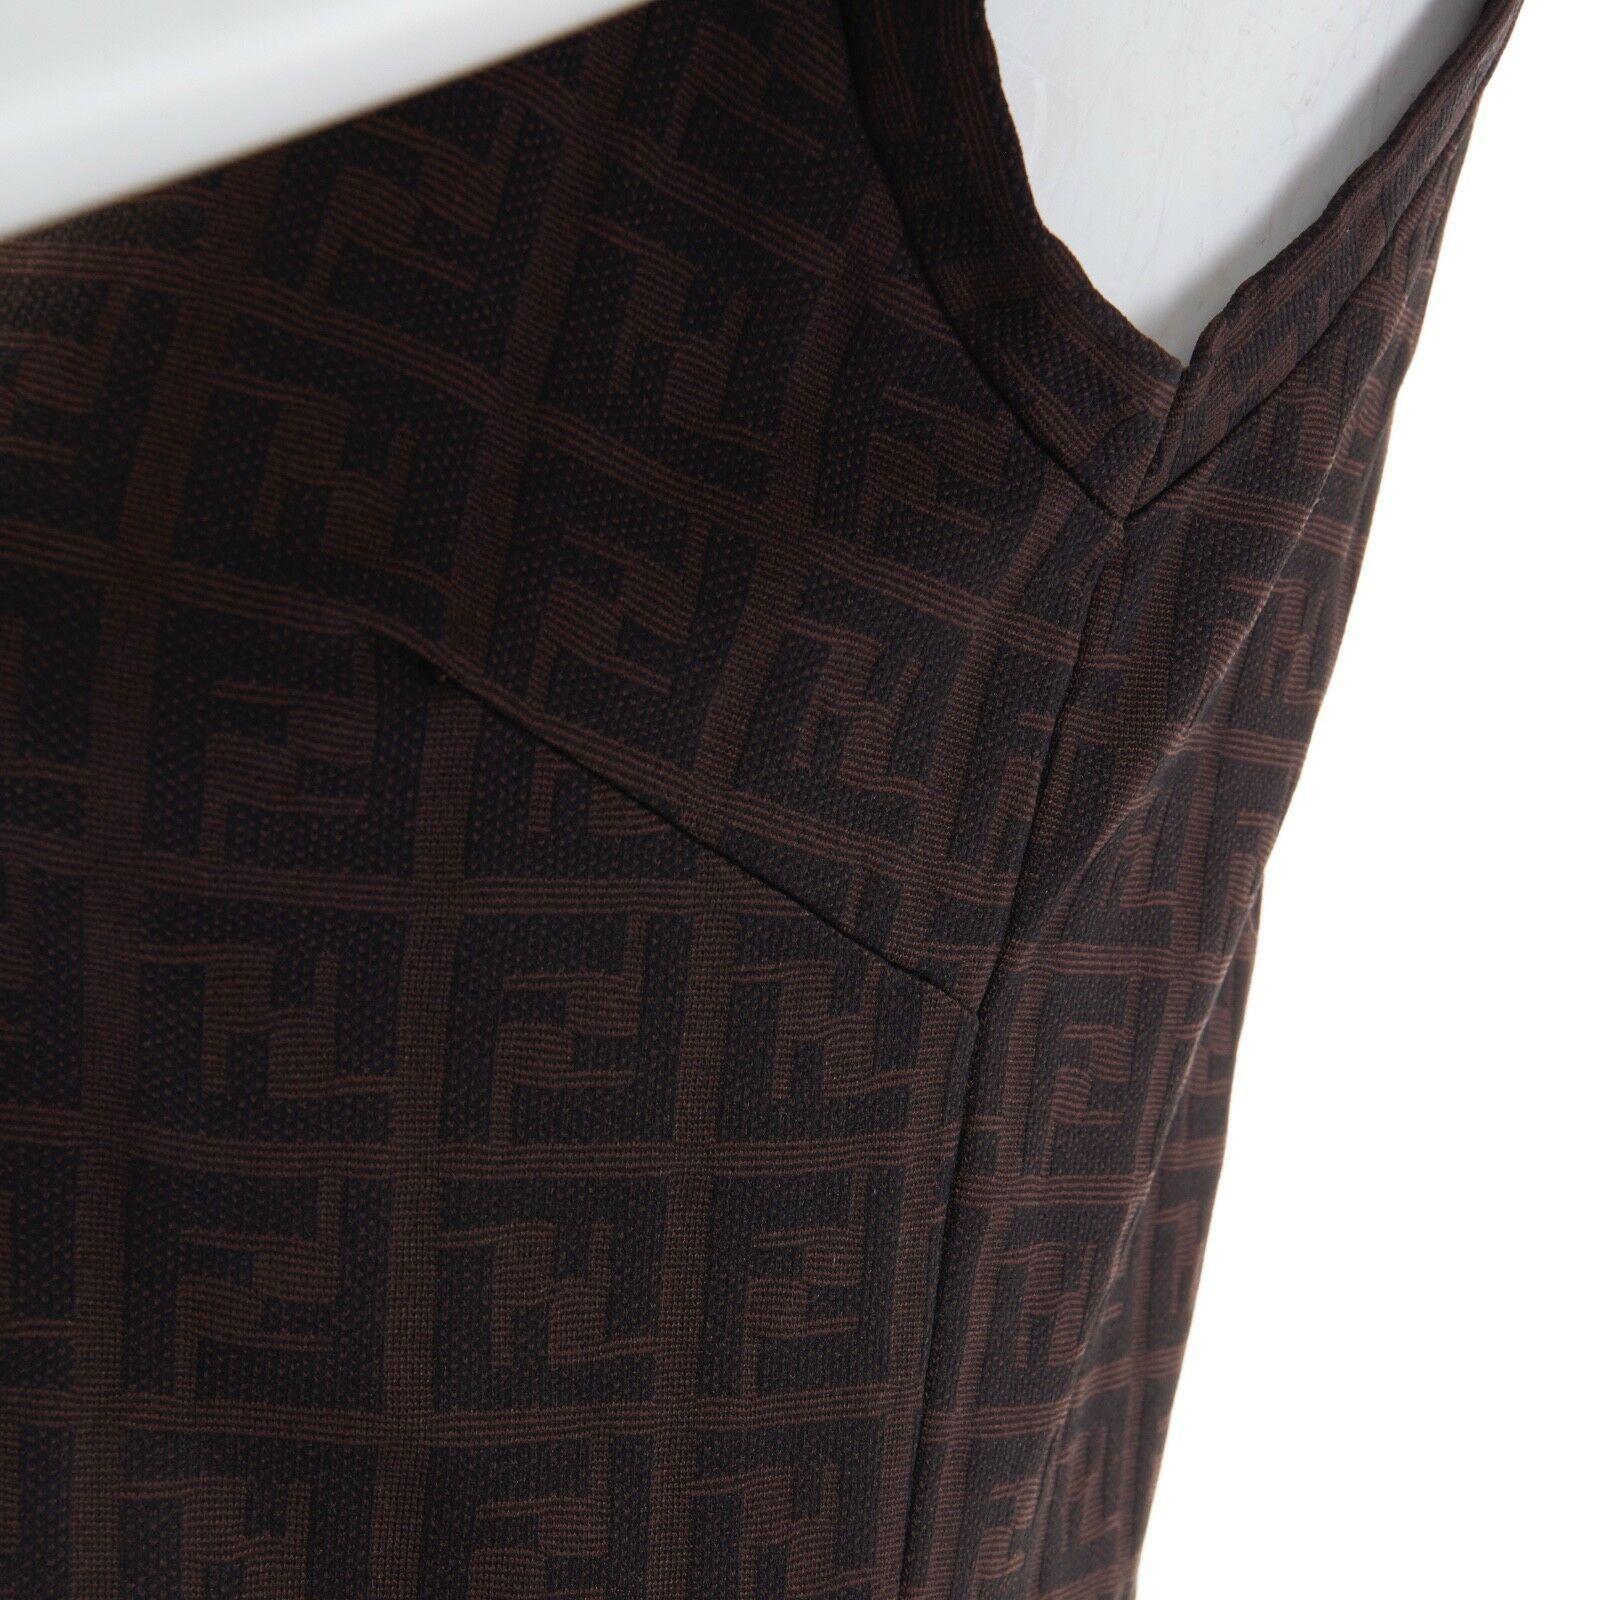 FENDI MARE Zucca FF monogram brown jacquard knit stretch mini dress IT44 L 1